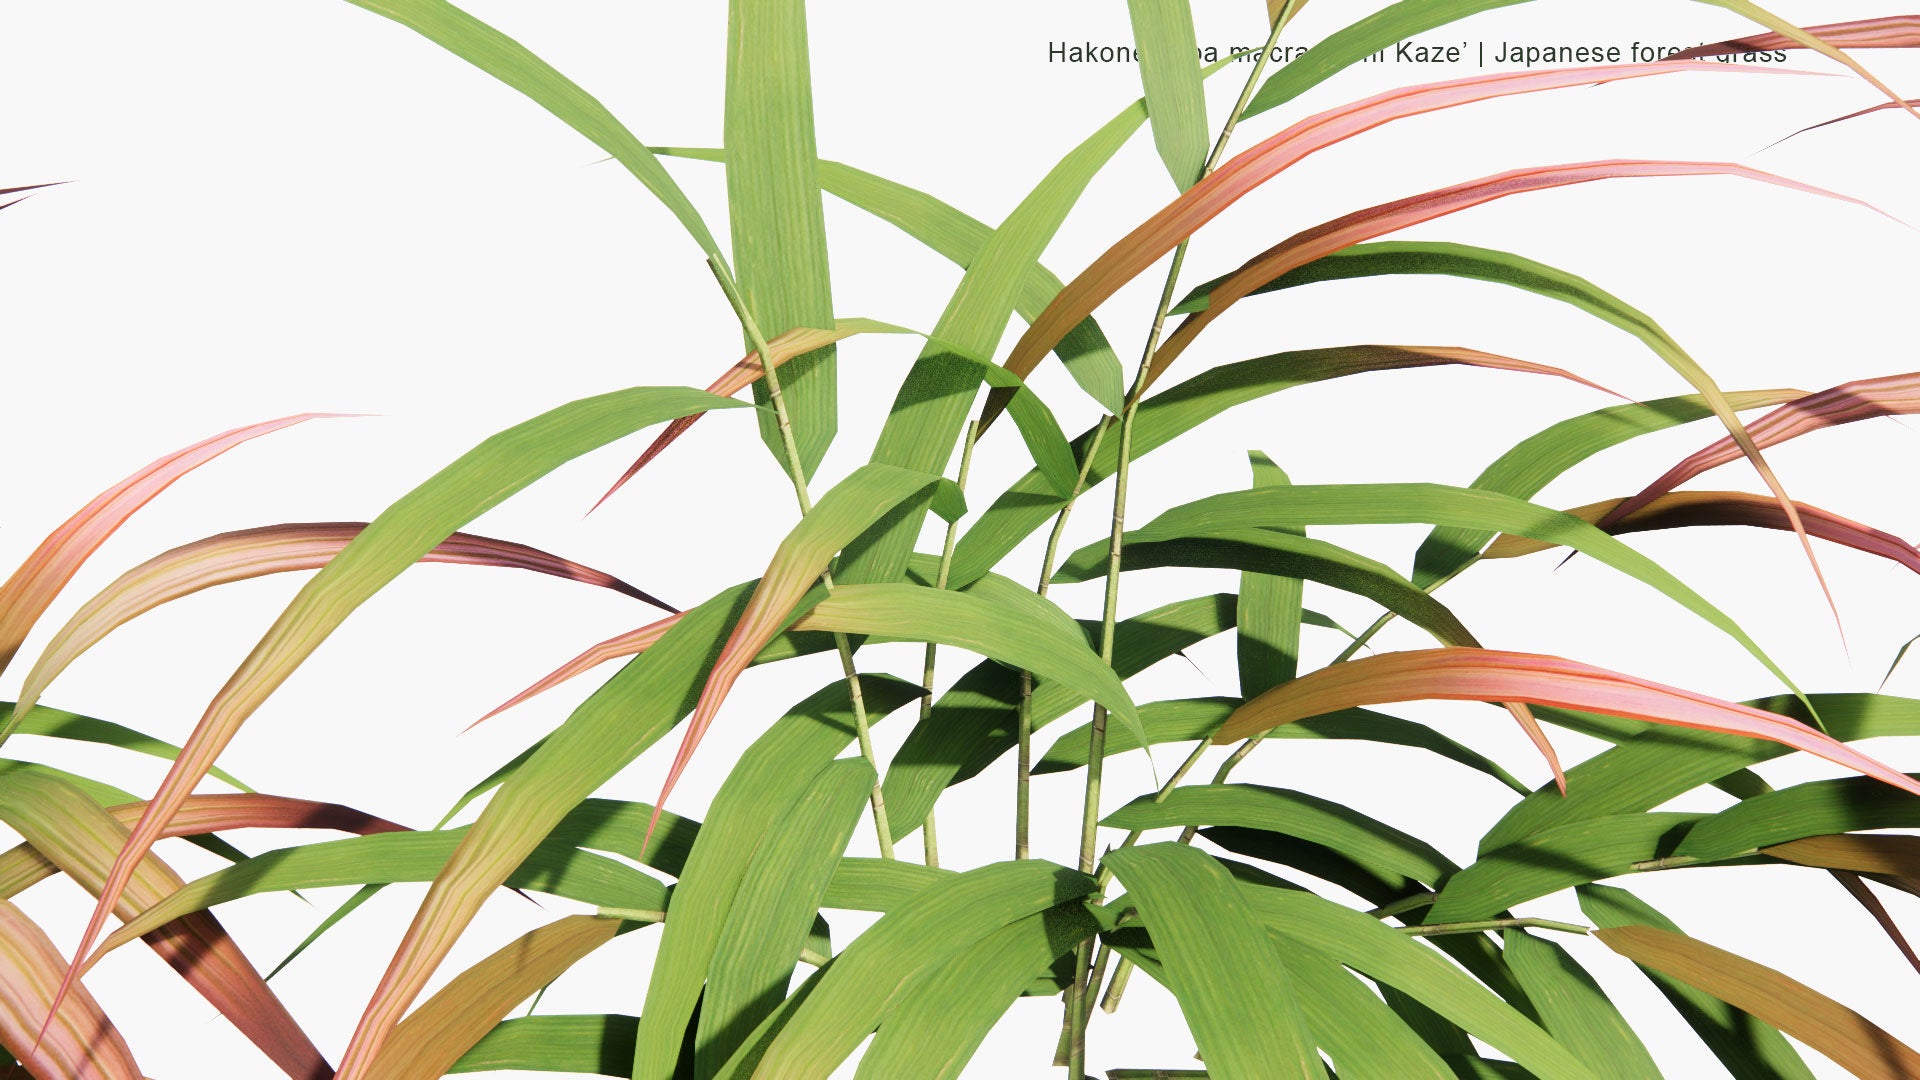 Low Poly Hakonechloa Macra 'Beni Kaze' - Japanese Forest Grass (3D Model)